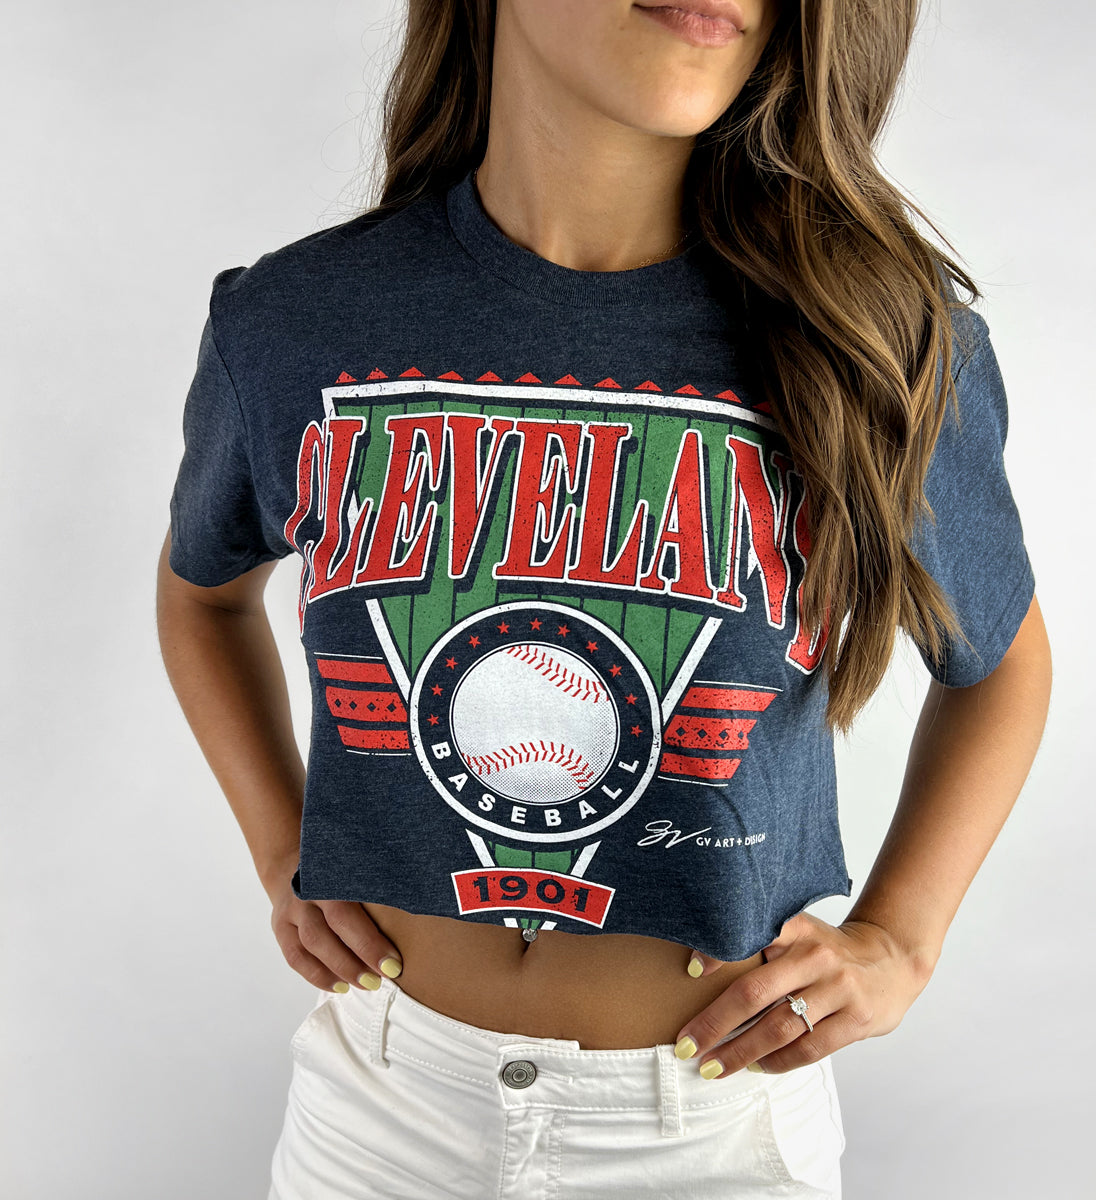 unique baseball shirt designs